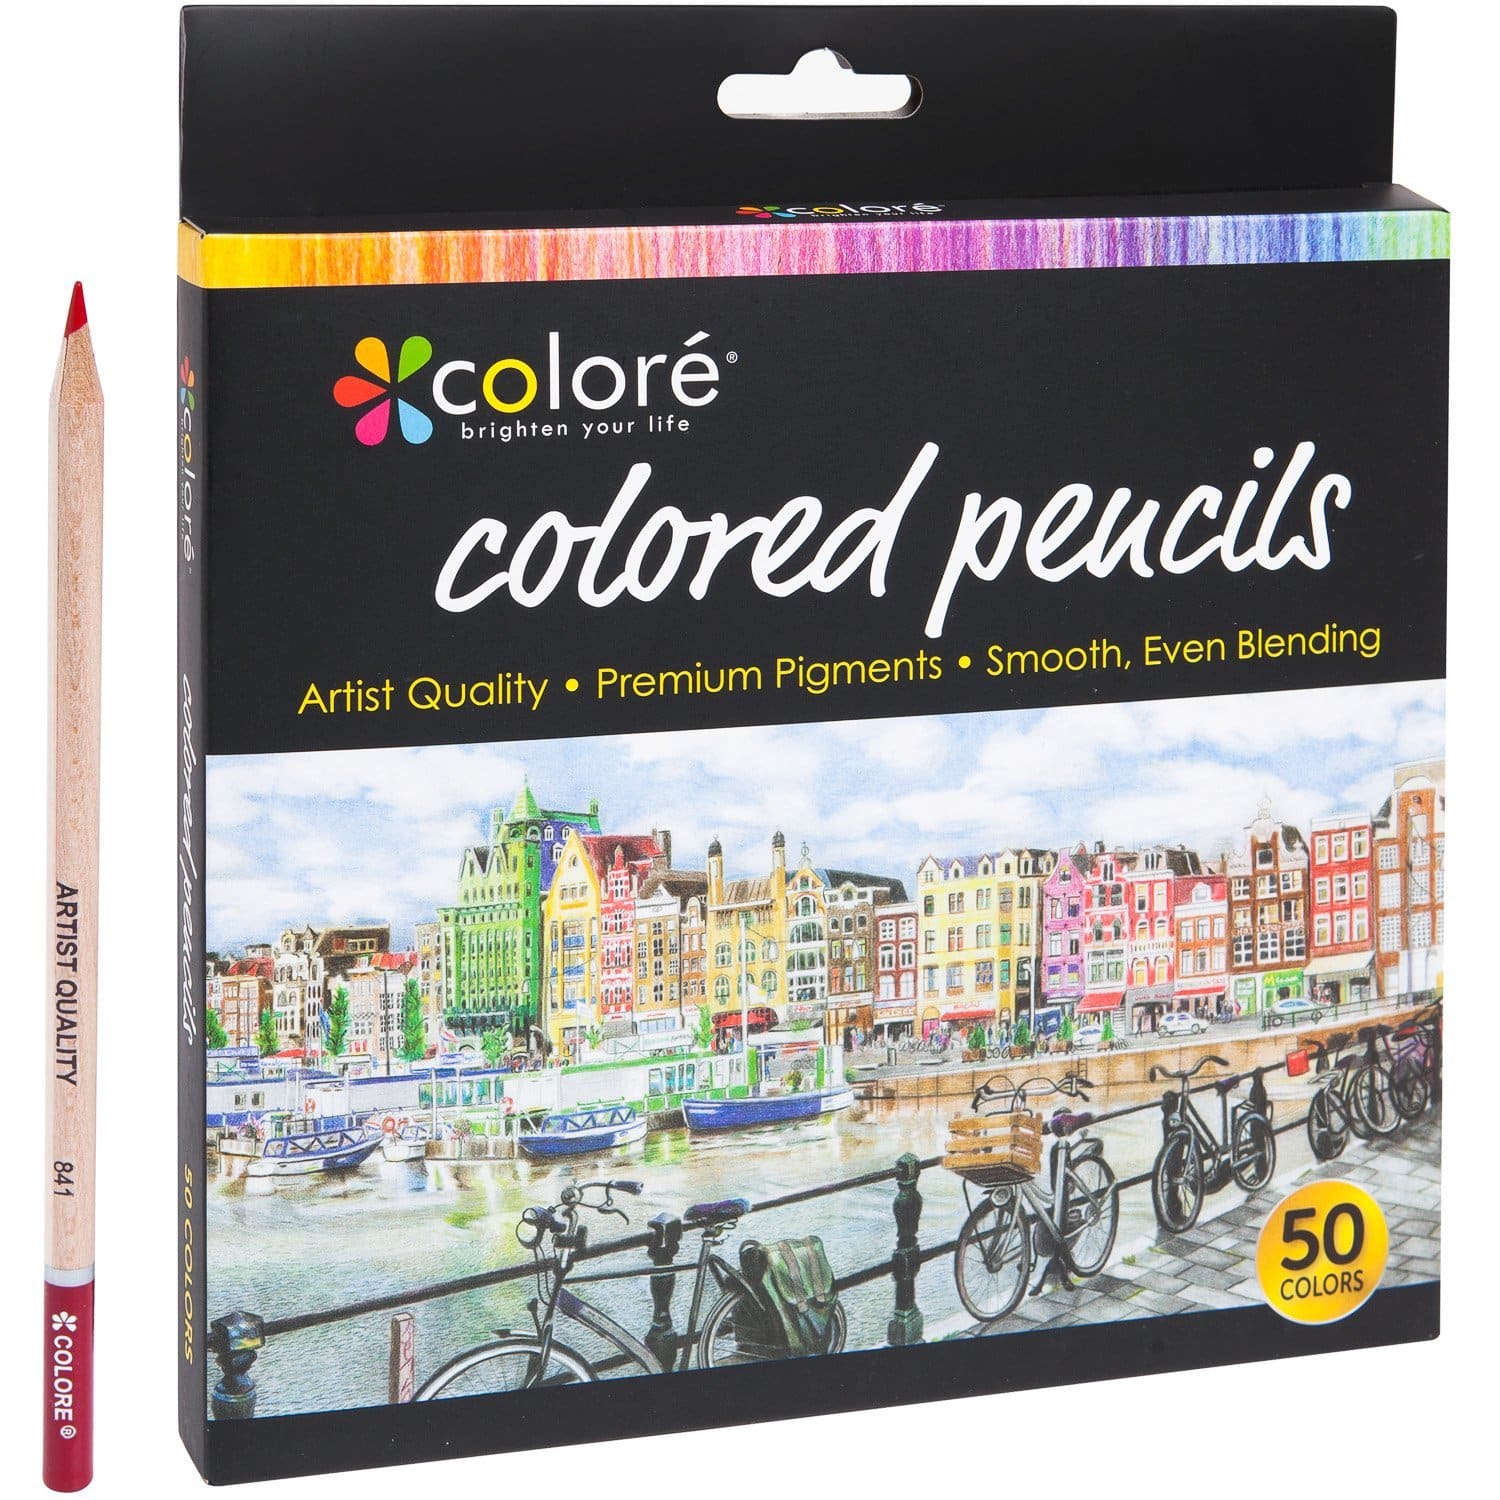 LIGHTNING DEAL ALERT! Colore Colored Pencils Set – 50 Vibrant Colors – $12.78